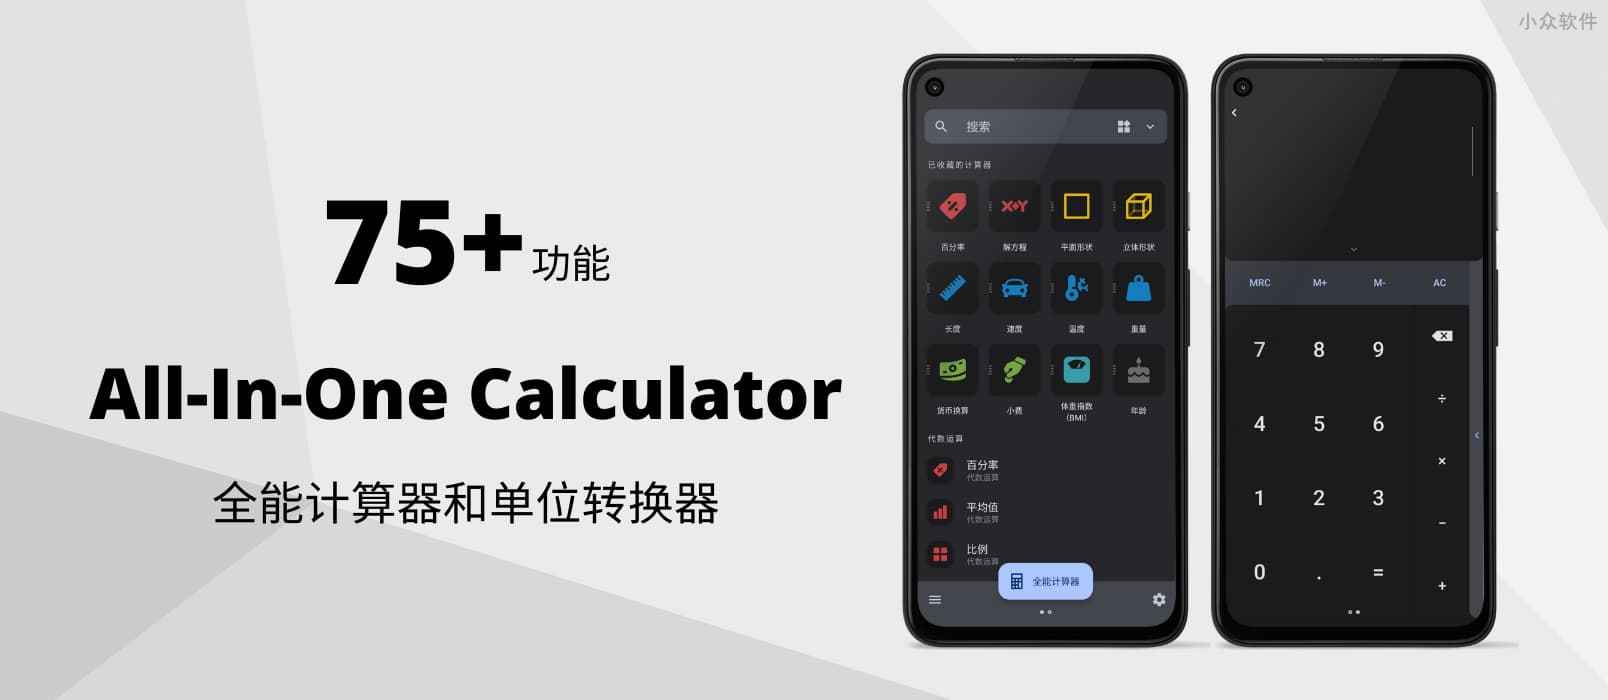 All-In-One Calculator - 75+ 功能，全能计算器和单位转换器[Android]